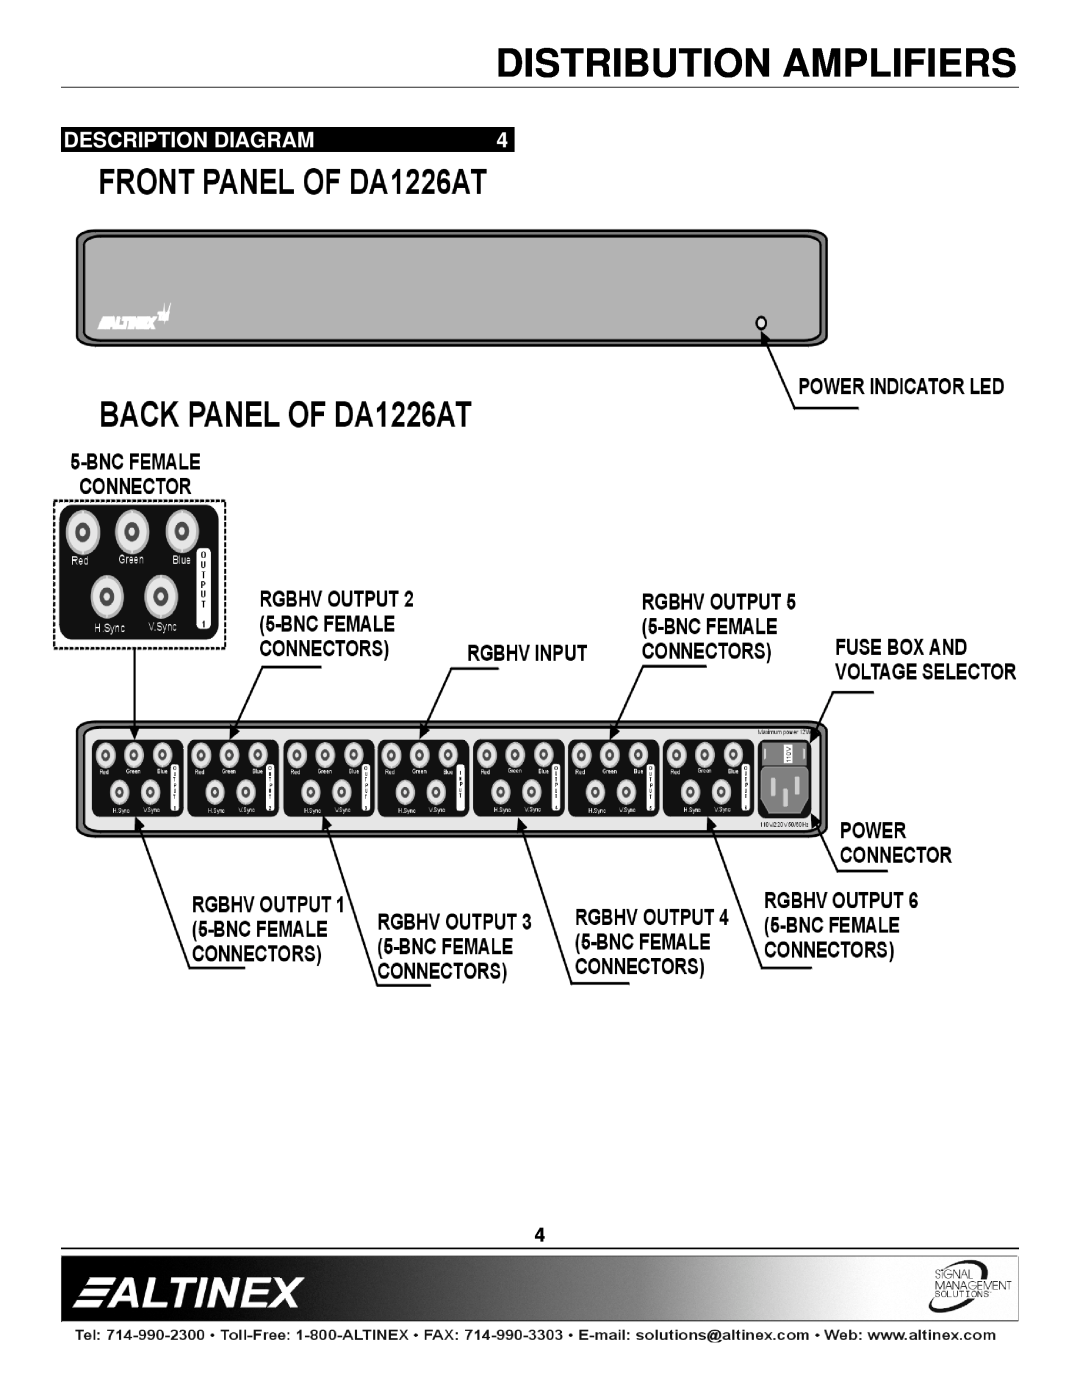 Altinex DA1226AT manual Distribution Amplifiers, Description Diagram 